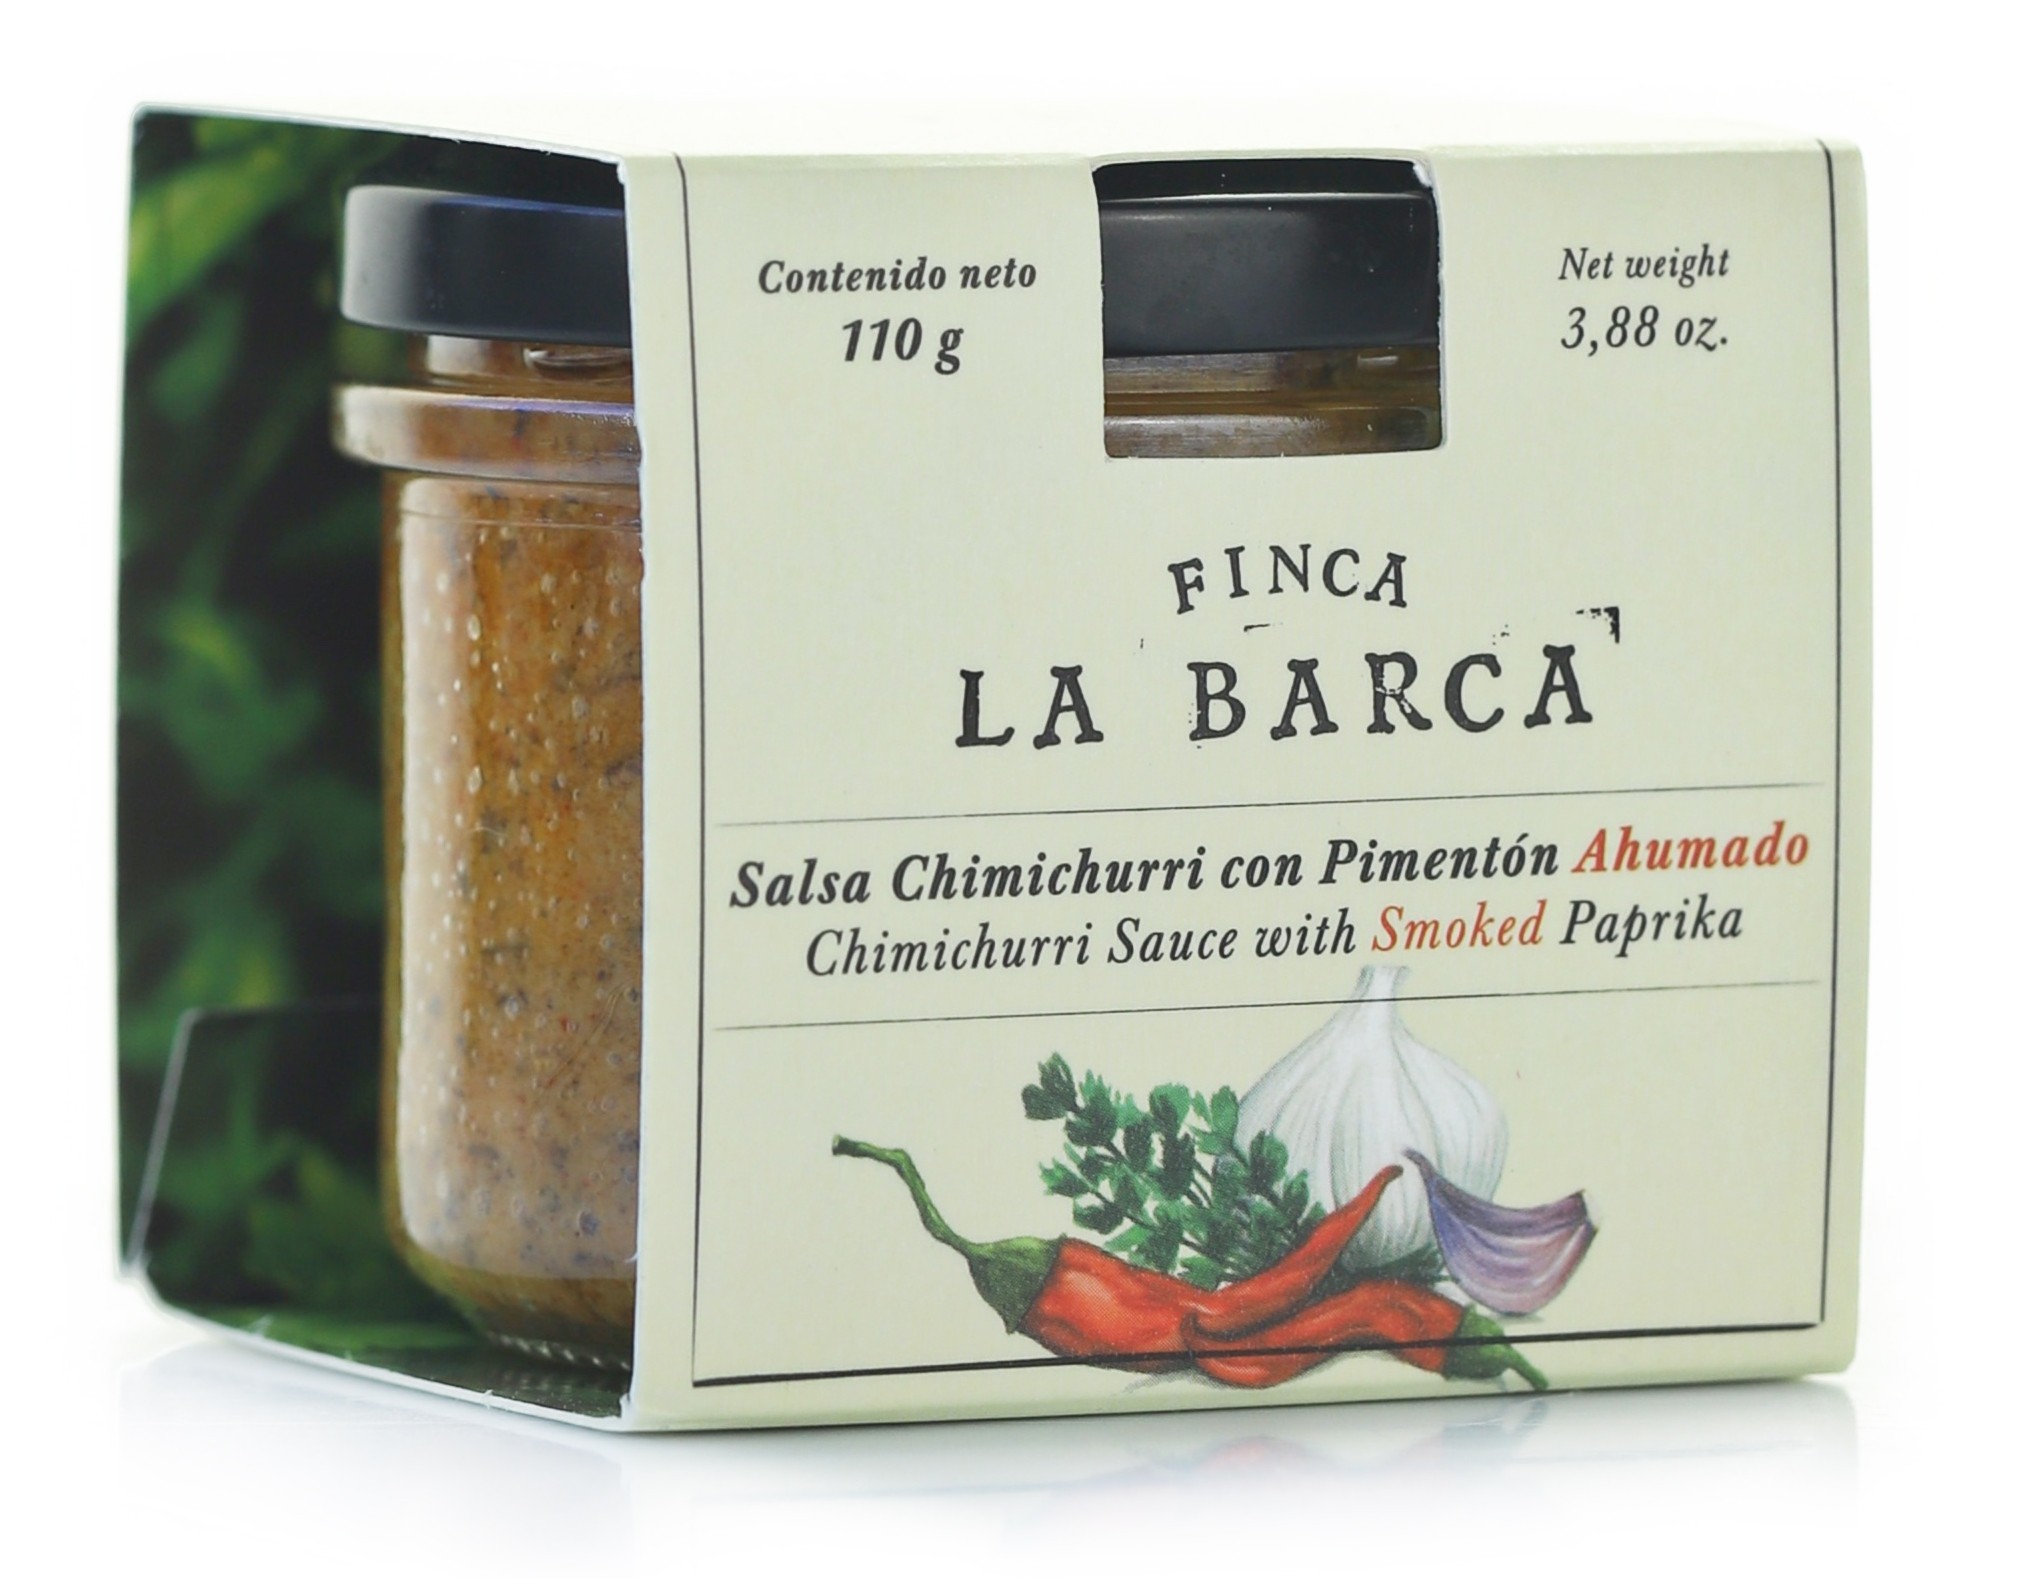 Chimichurri Sauce with Smoked Paprika "Finca La Barca" 110G